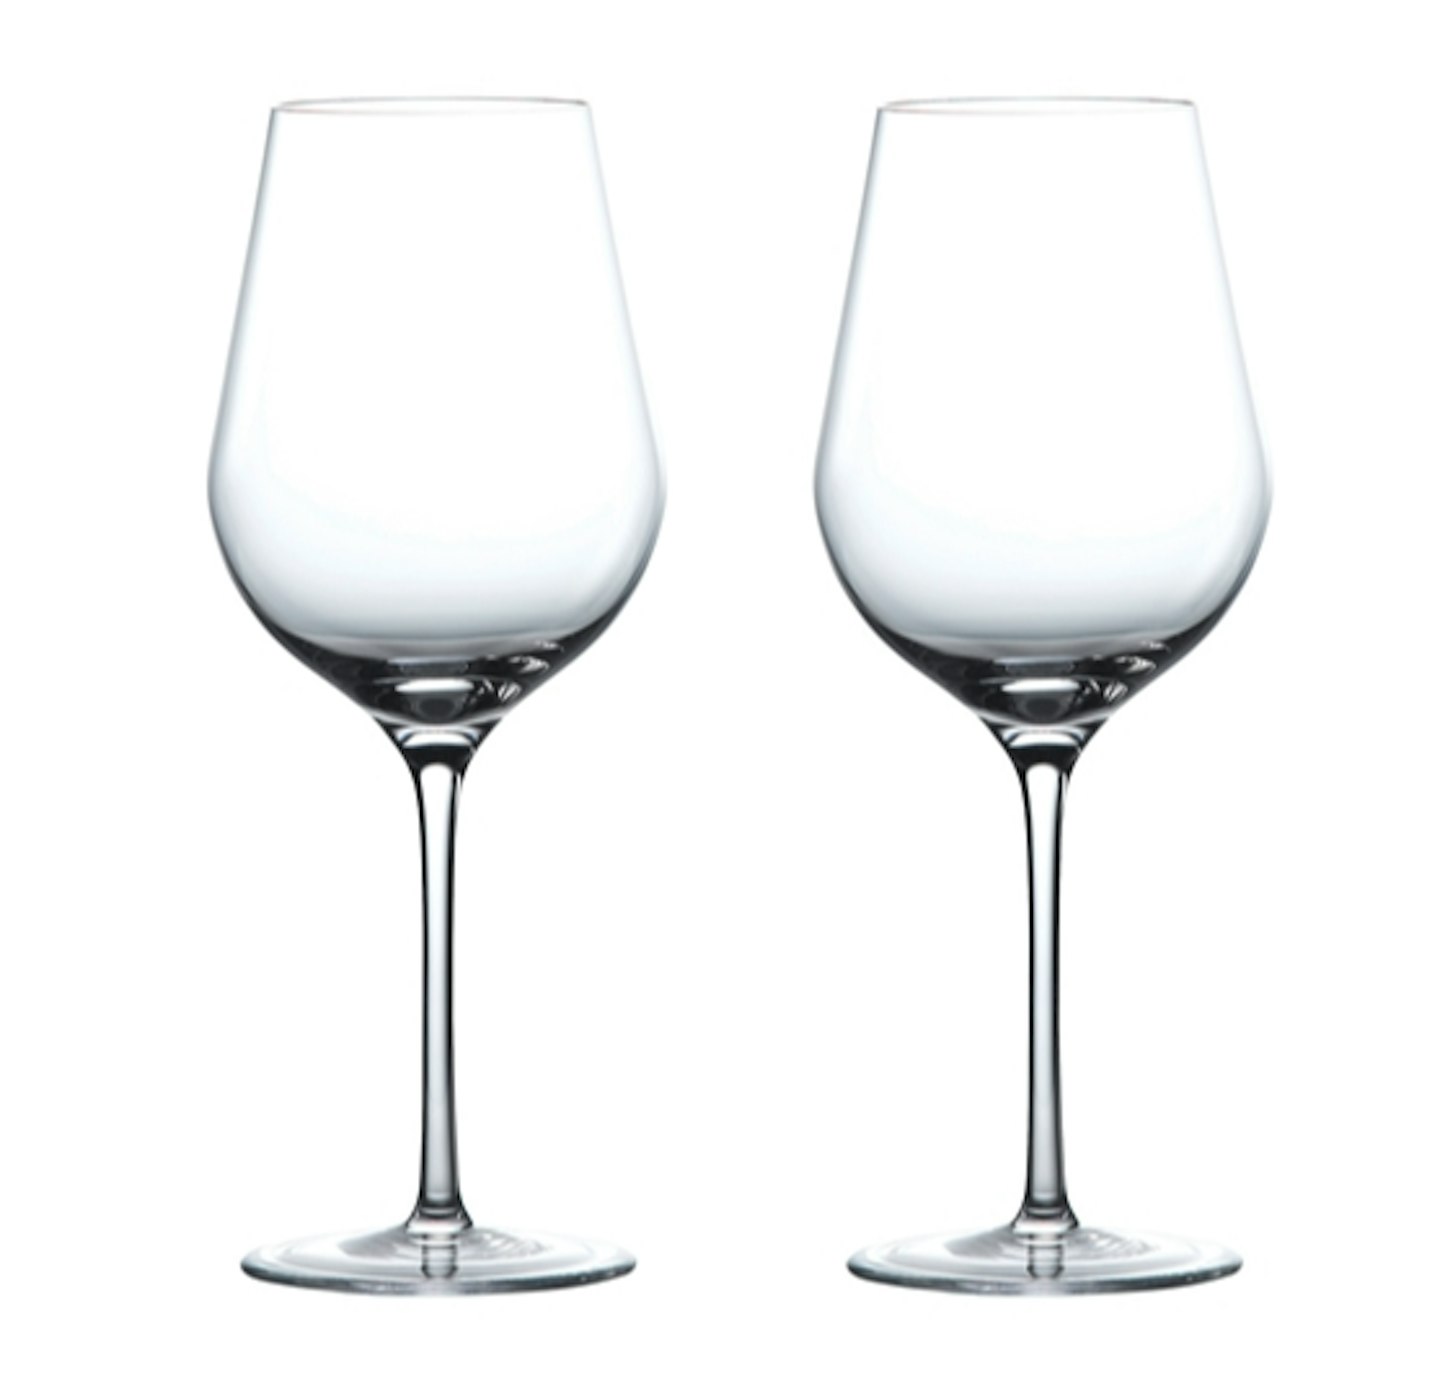 https://images.bauerhosting.com/affiliates/sites/10/2022/07/Wedgwood-globe-white-wine-glass.png?auto=format&w=1440&q=80